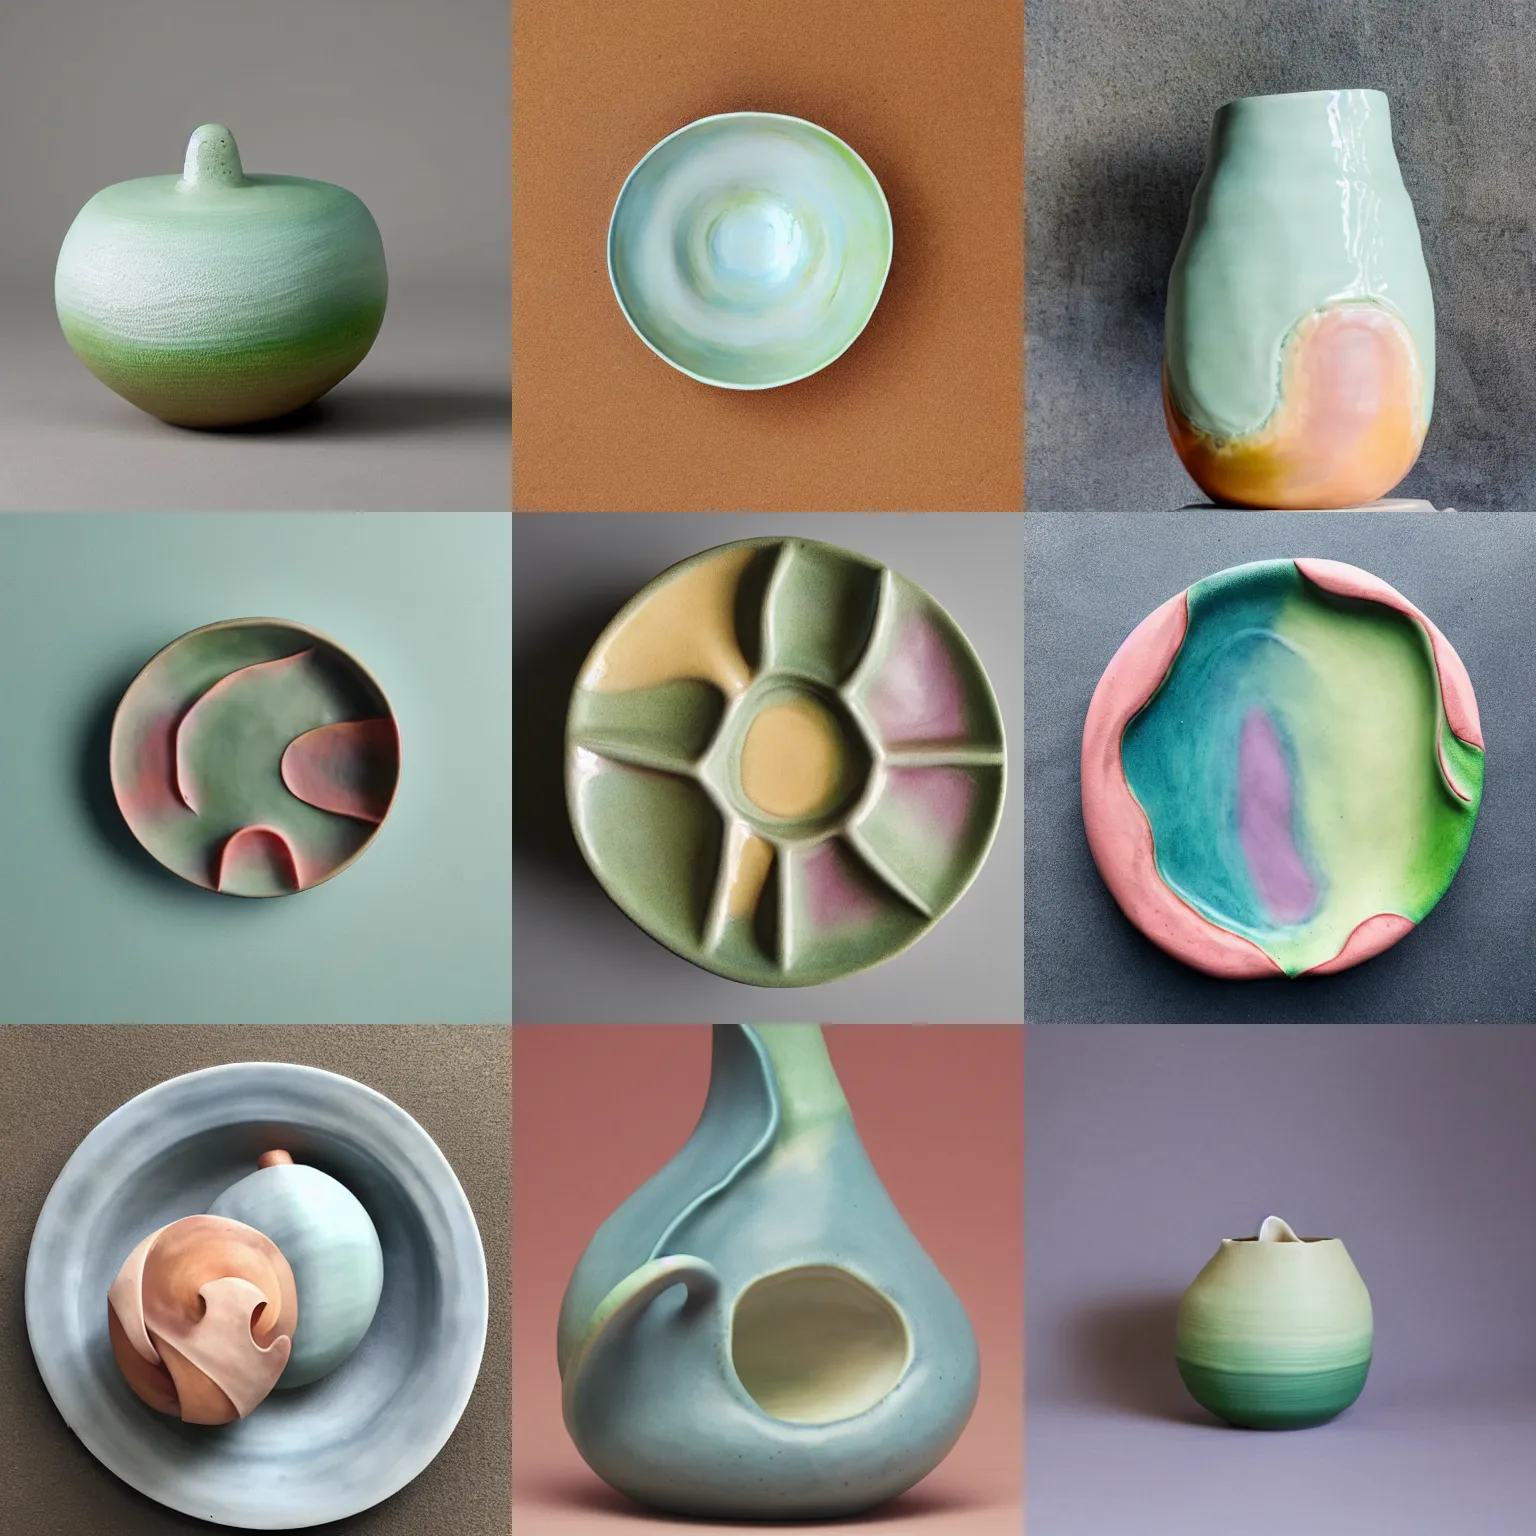 Prompt: A handbuilt ceramics piece inspired by food forms, pastel glaze, portfolio photography